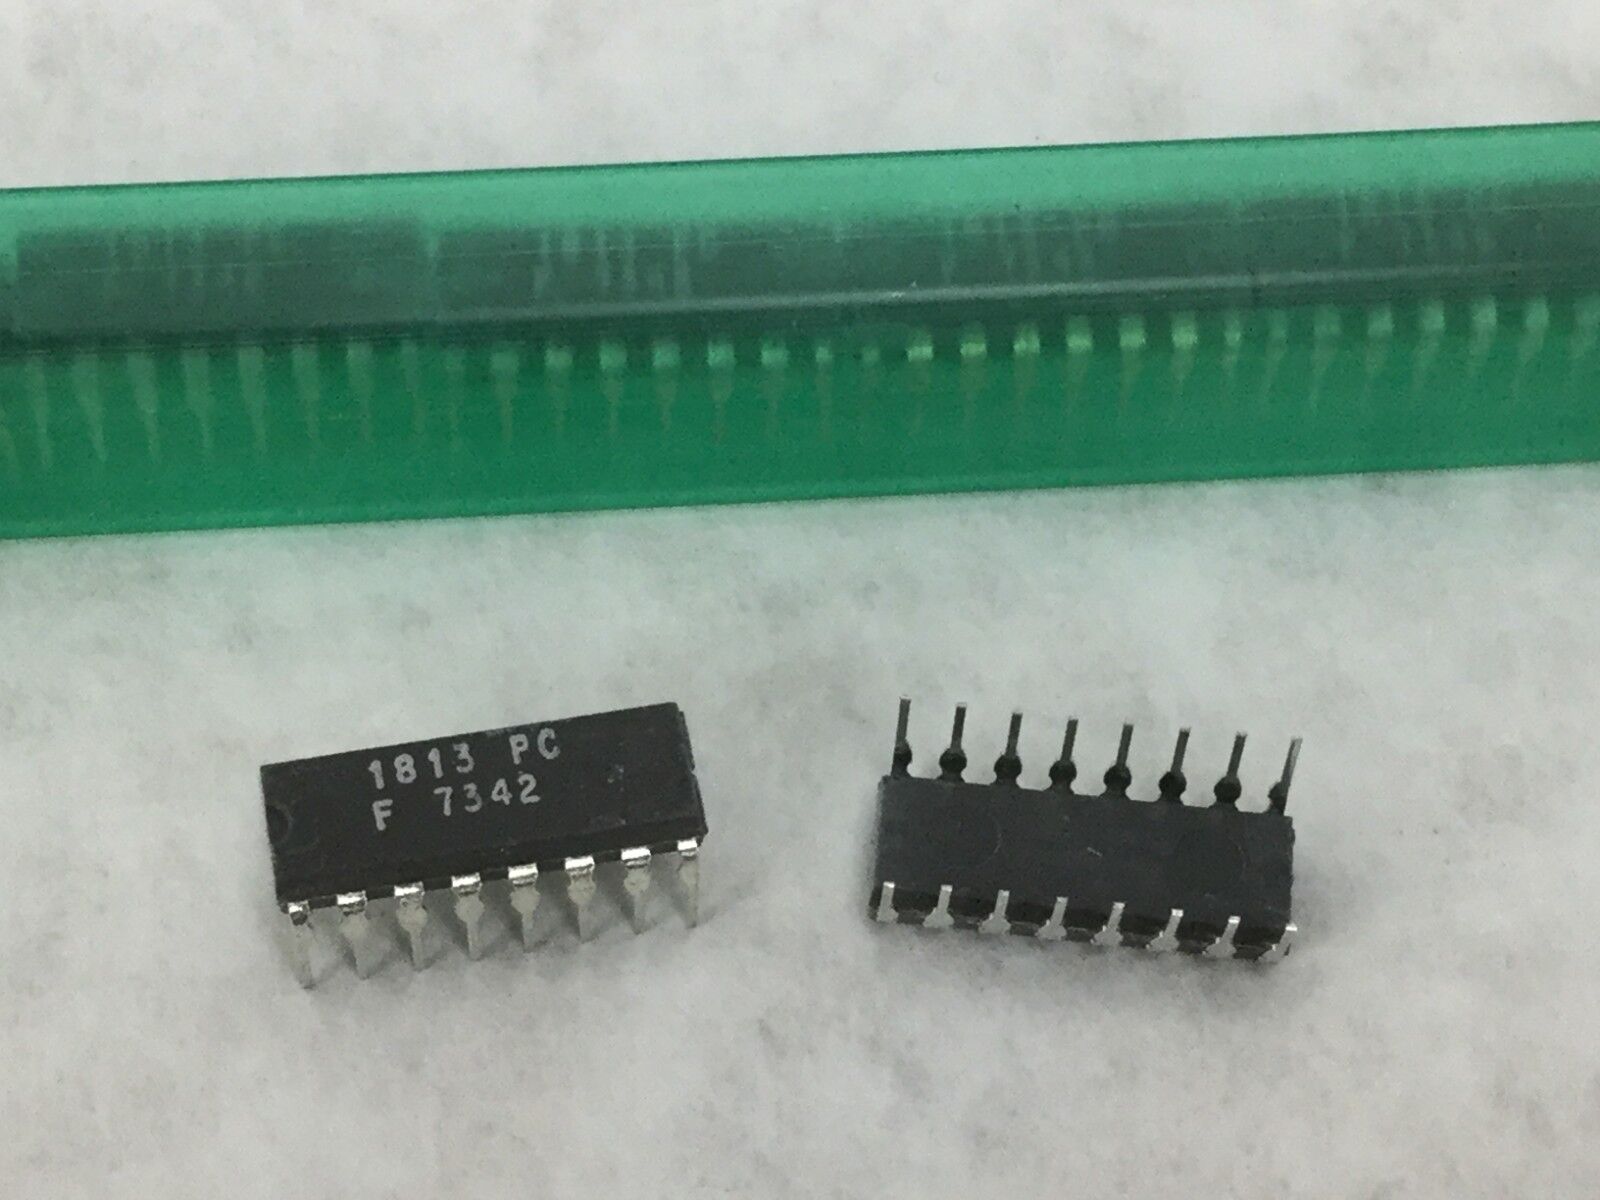 FAIRCHILD 1813 PC  16-Pin Dip Integrated Circuit  Lot of 15